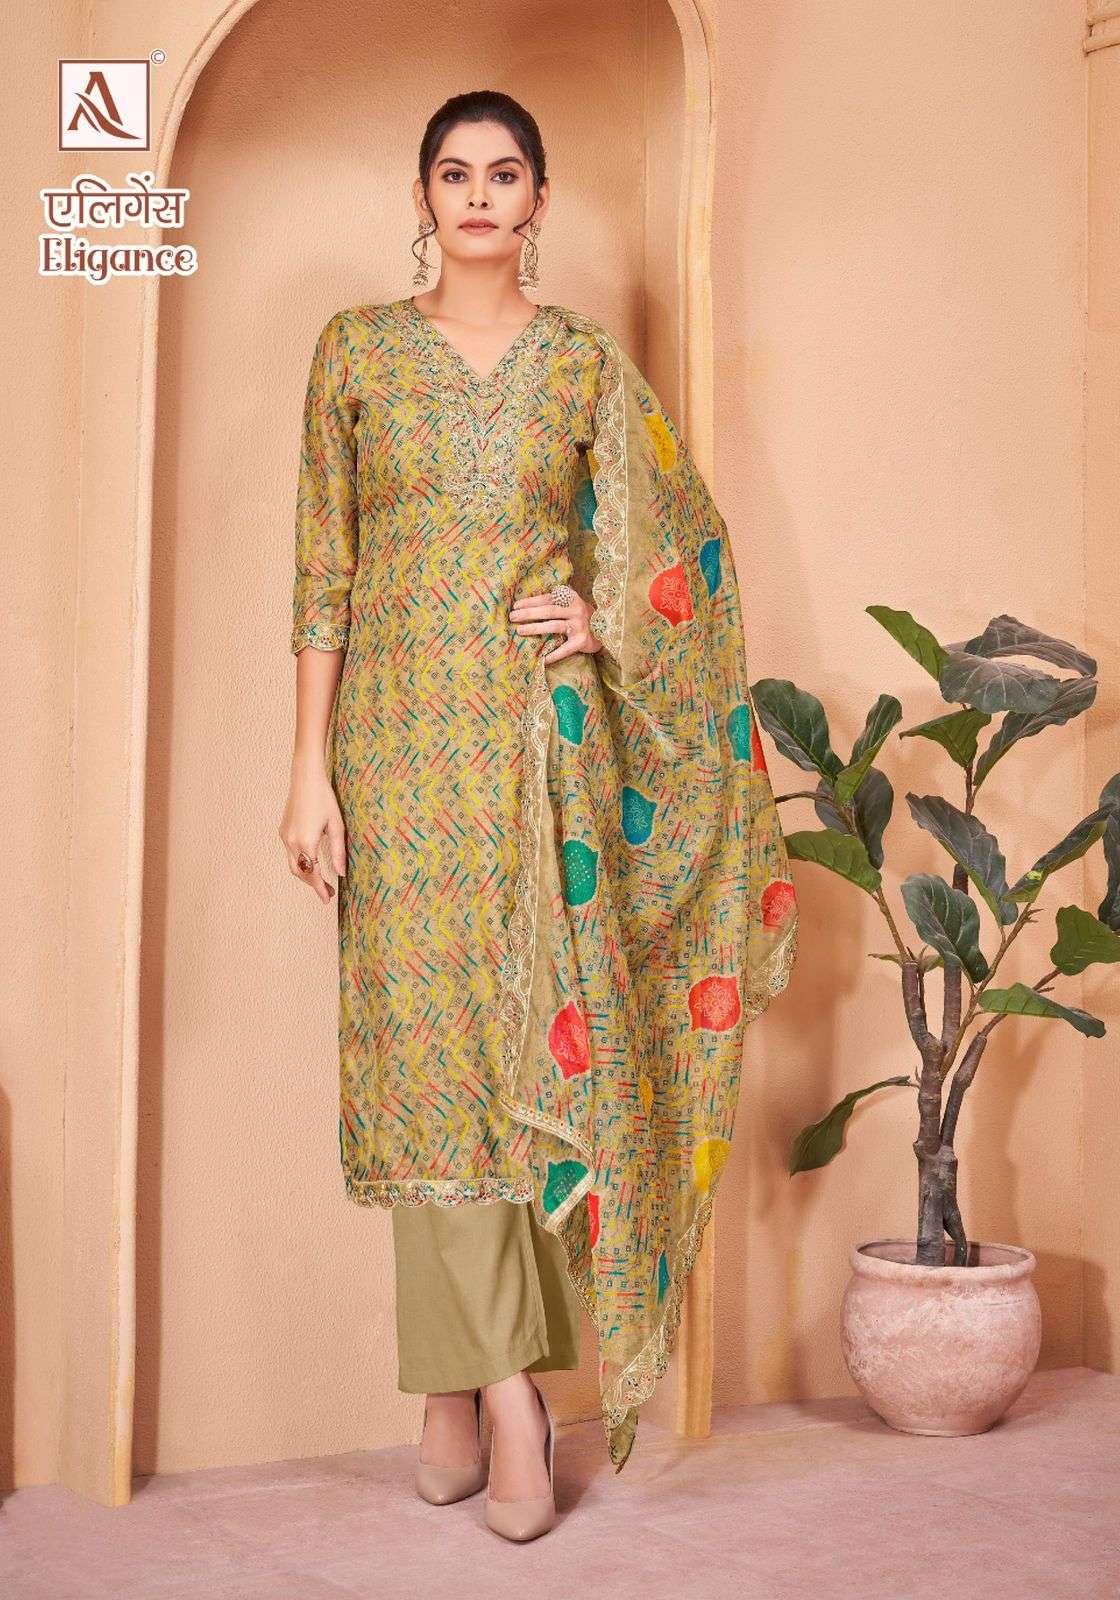 alok suit elegance designer pakistani salwar kameez wholesaler surat gujarat